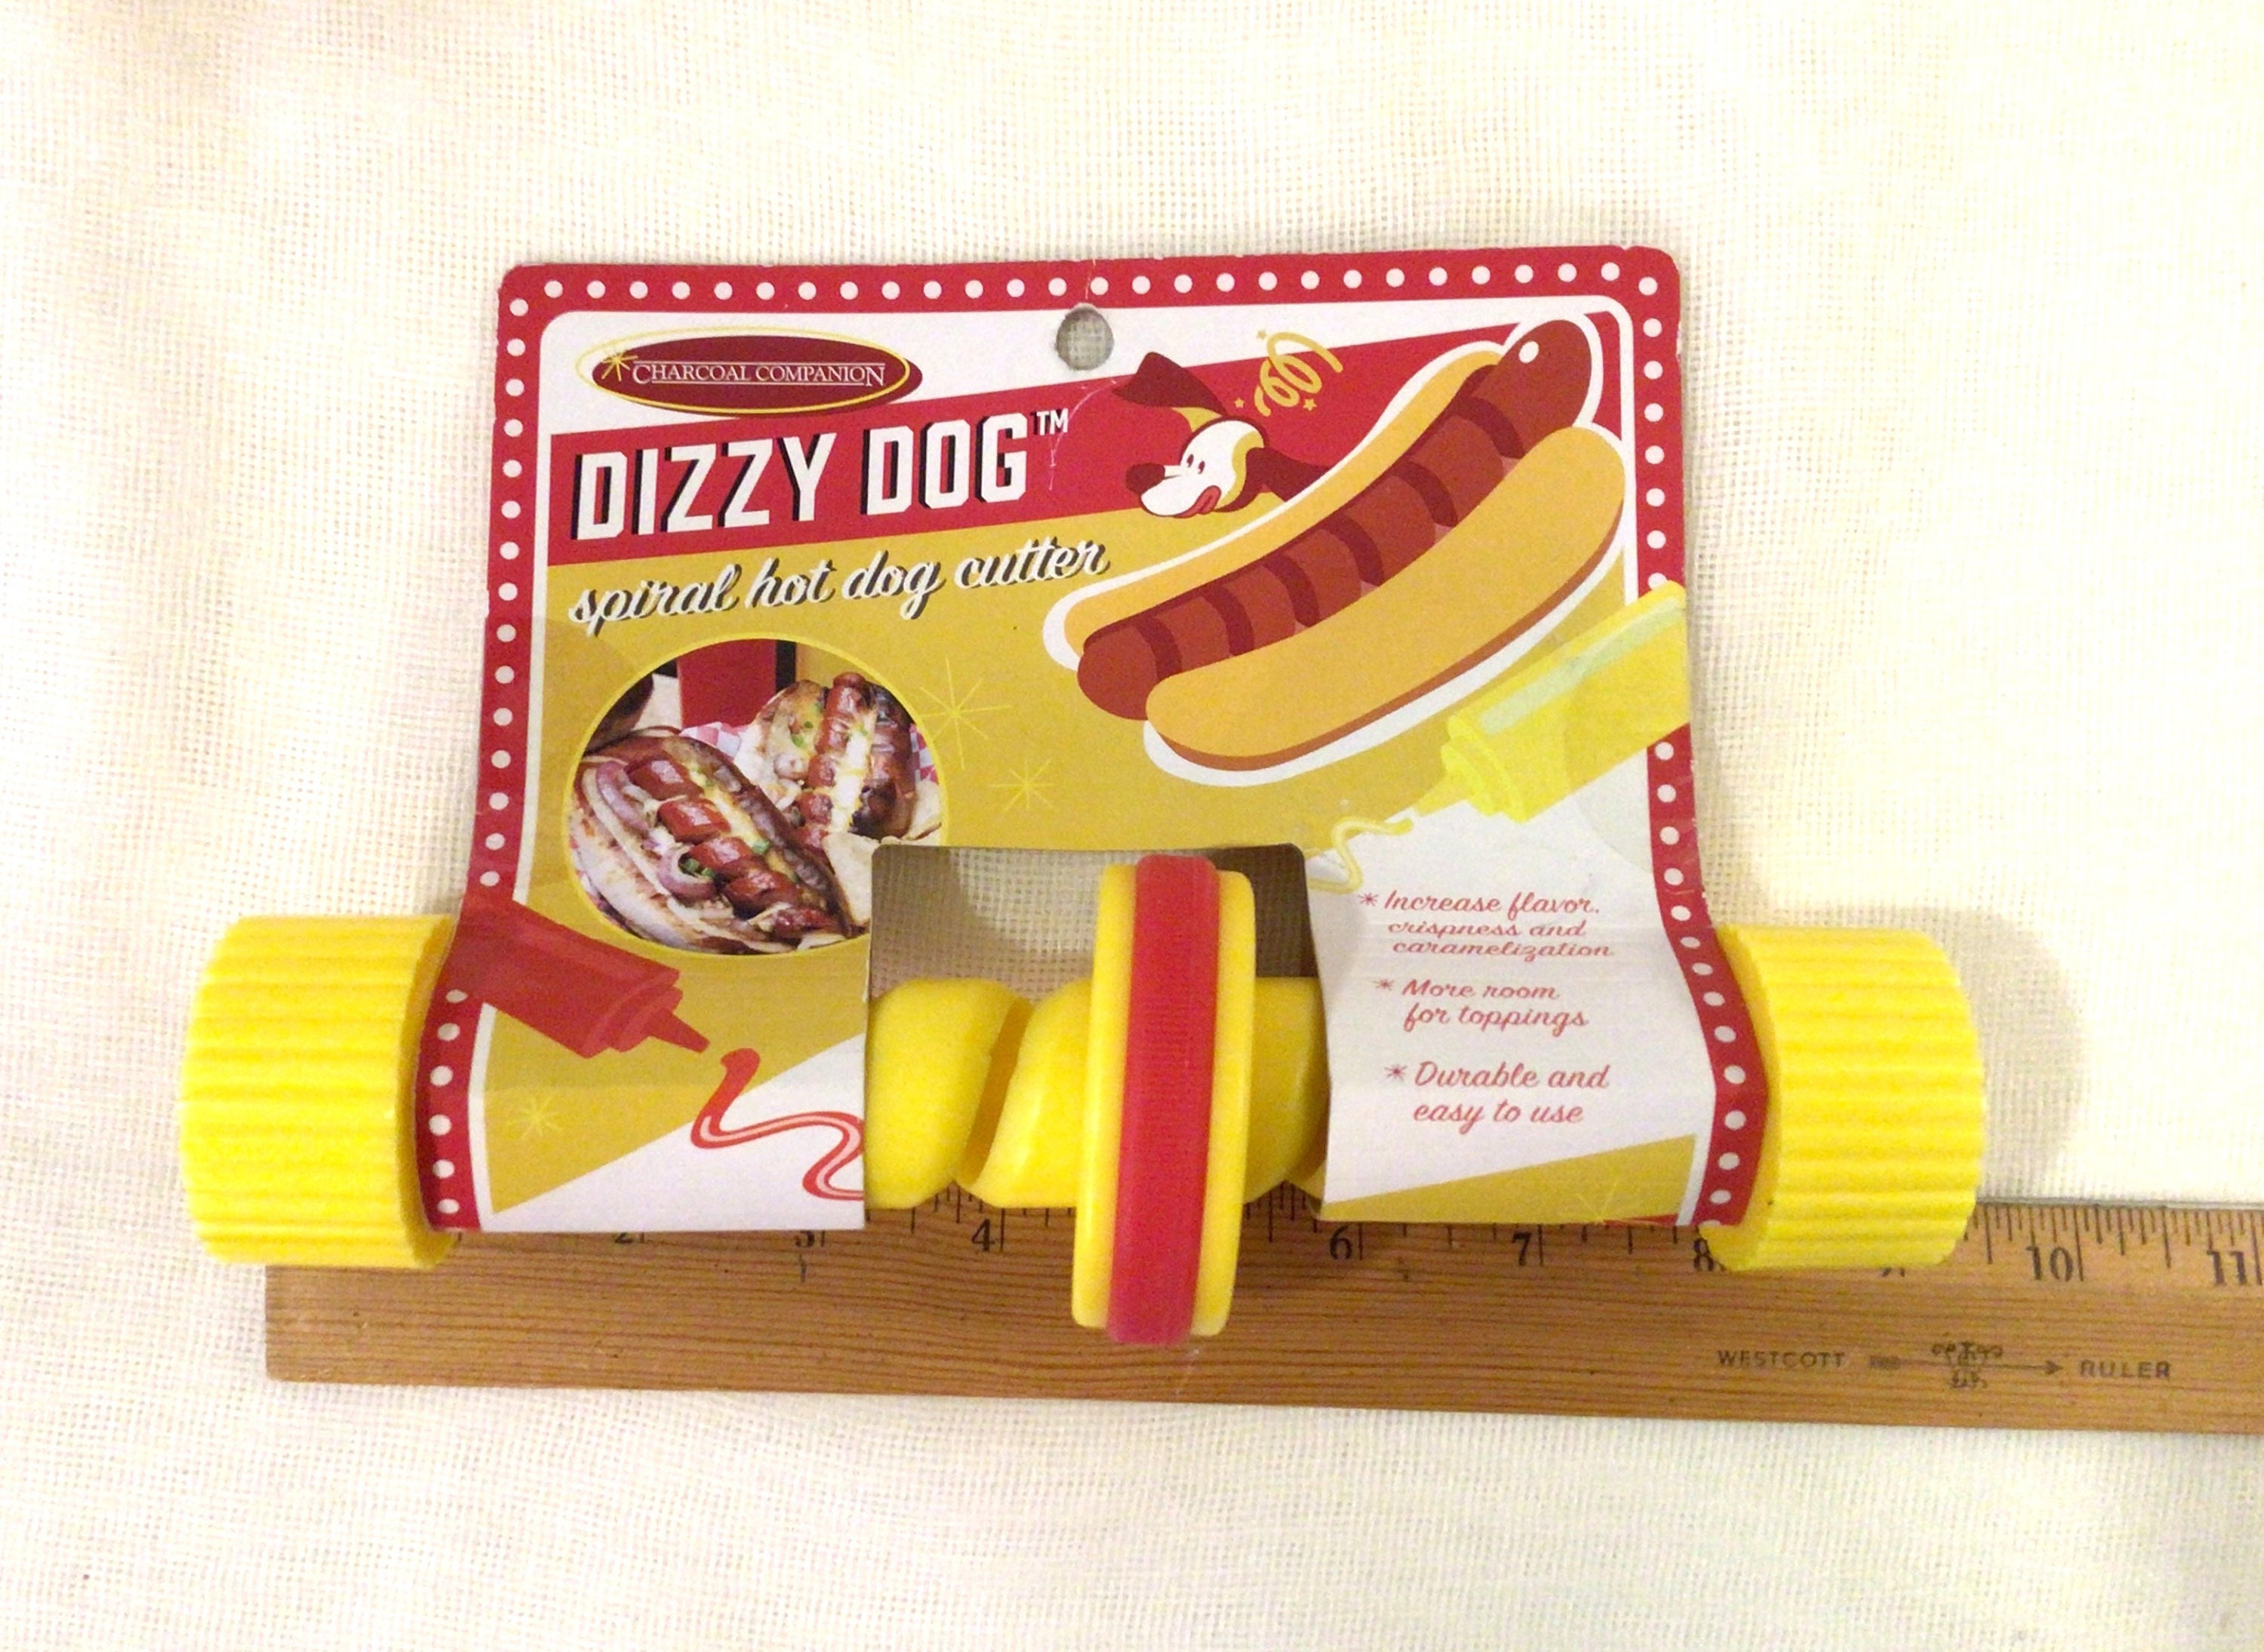 Dizzy Dog Spiral Hot Dog Cutter Charcoal Companion Yellow NEW